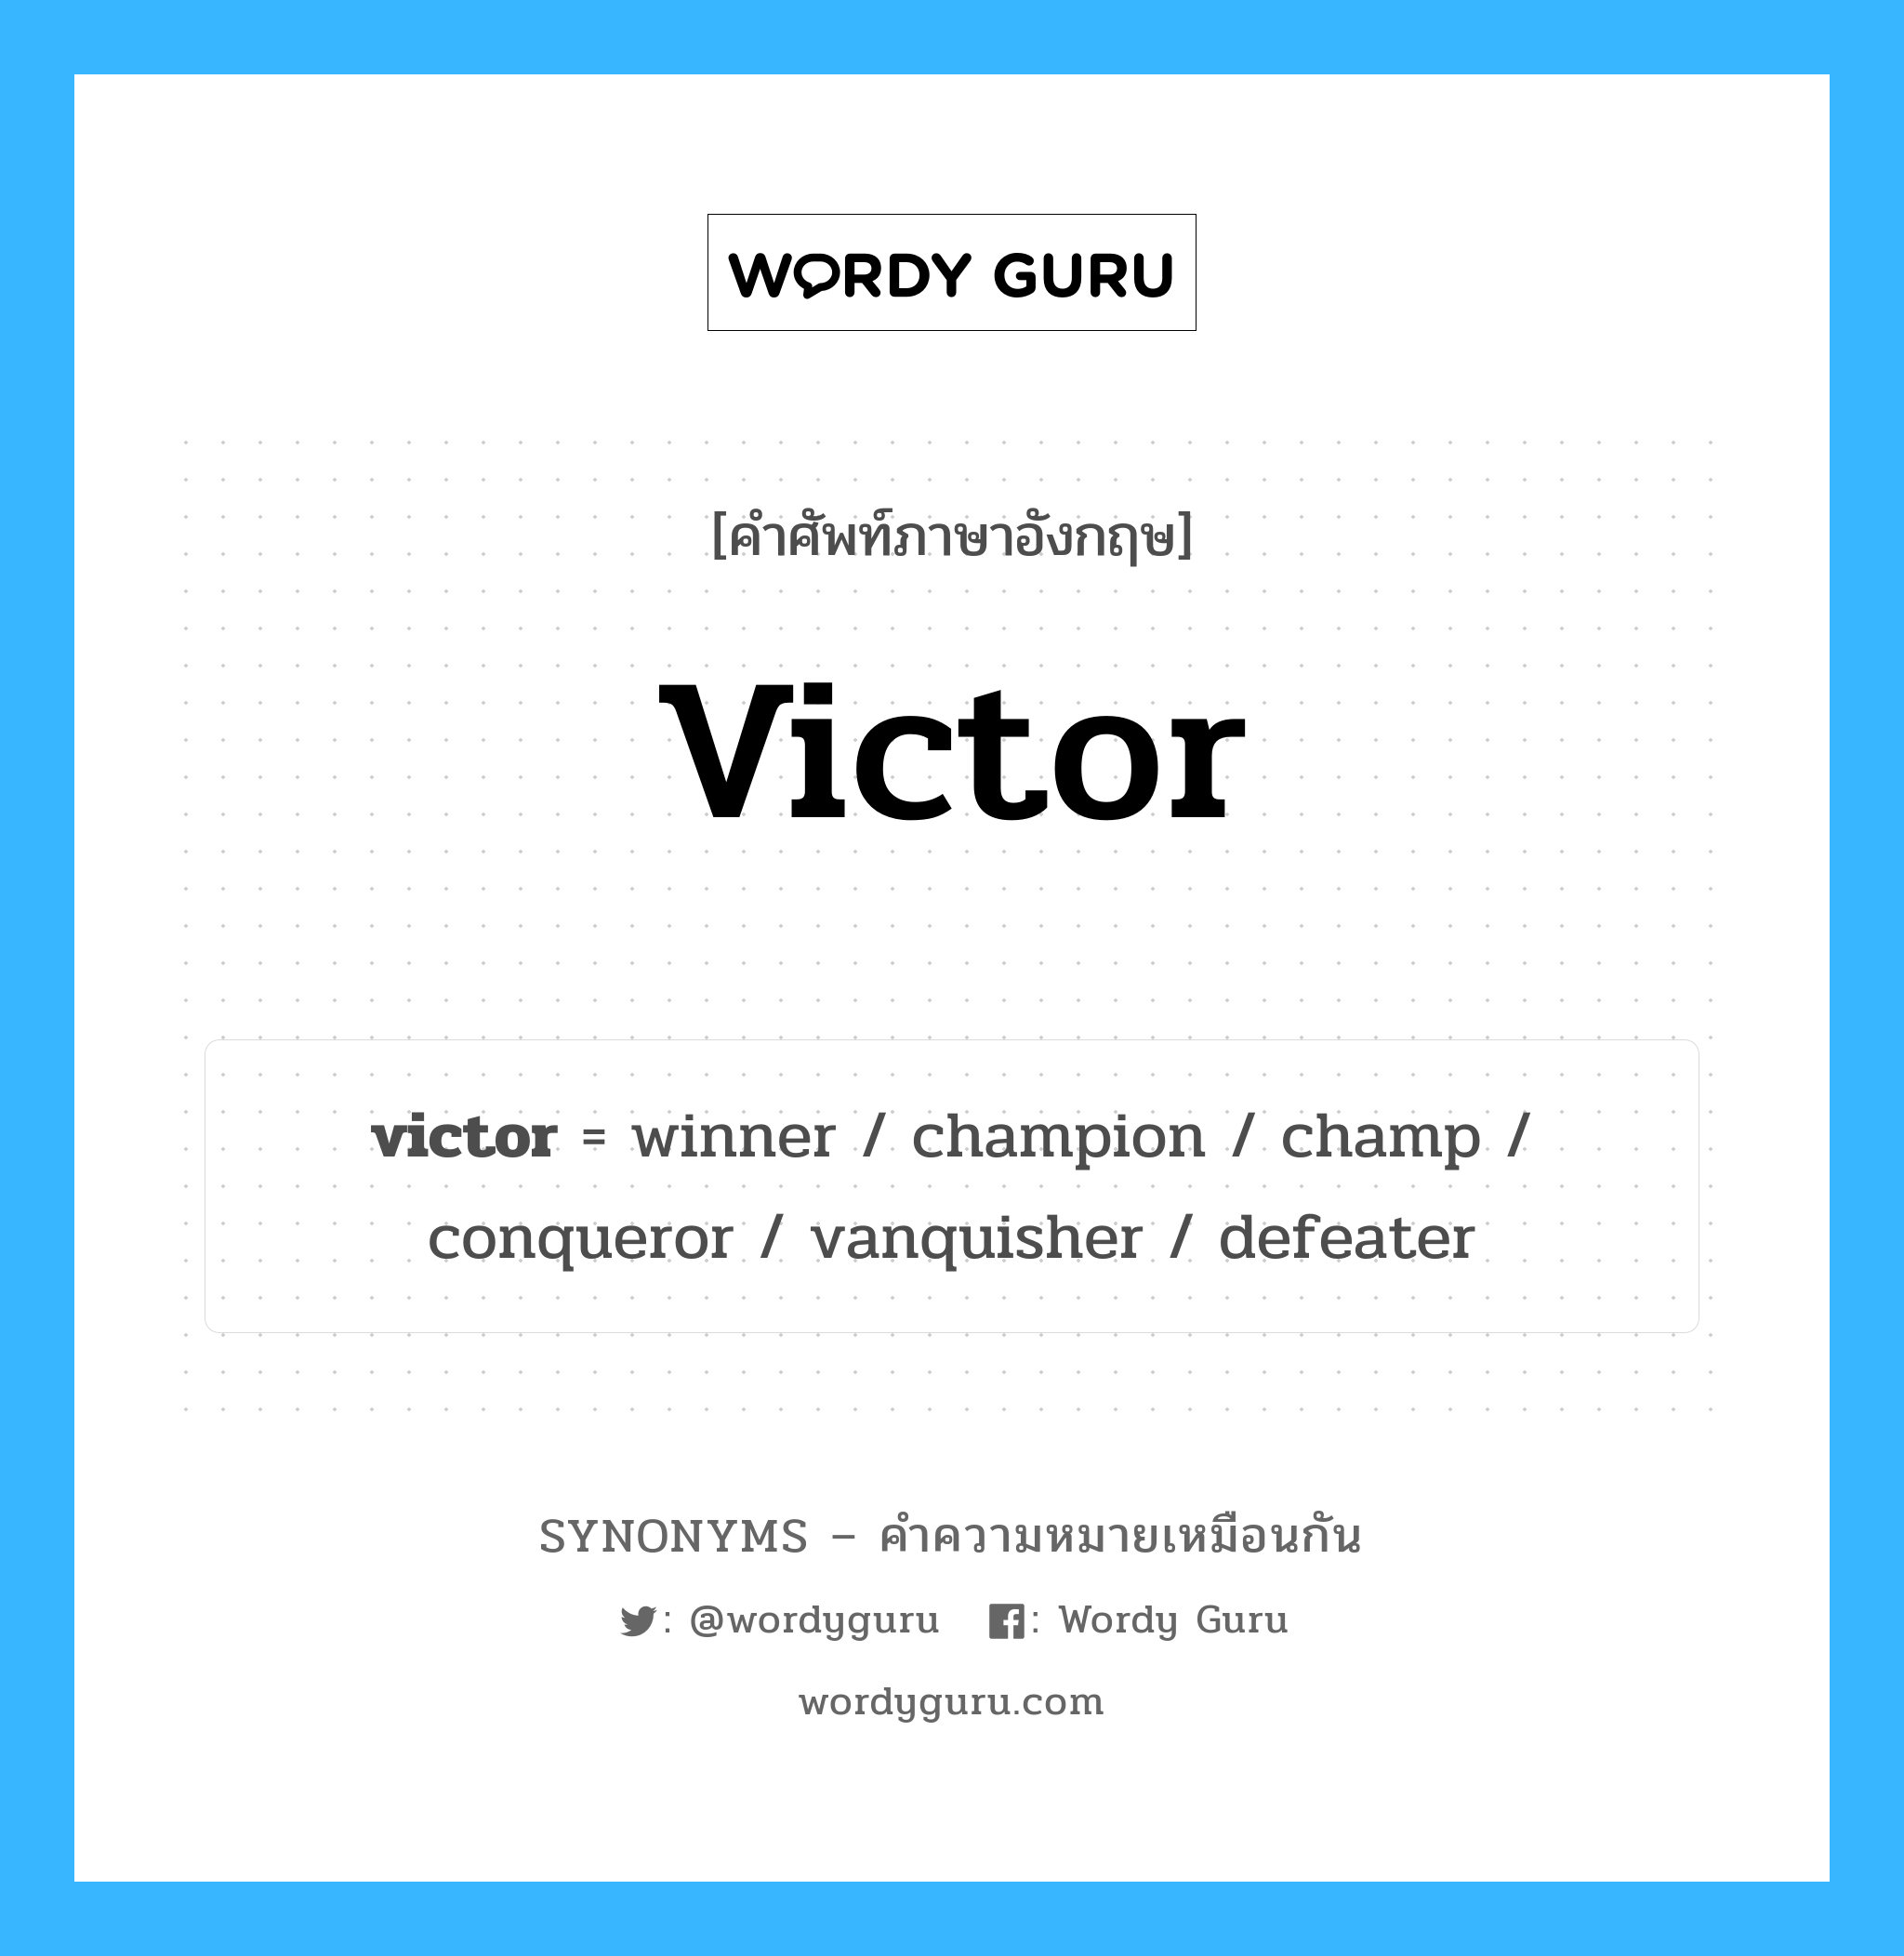 champ เป็นหนึ่งใน victor และมีคำอื่น ๆ อีกดังนี้, คำศัพท์ภาษาอังกฤษ champ ความหมายคล้ายกันกับ victor แปลว่า แชมป์ หมวด victor